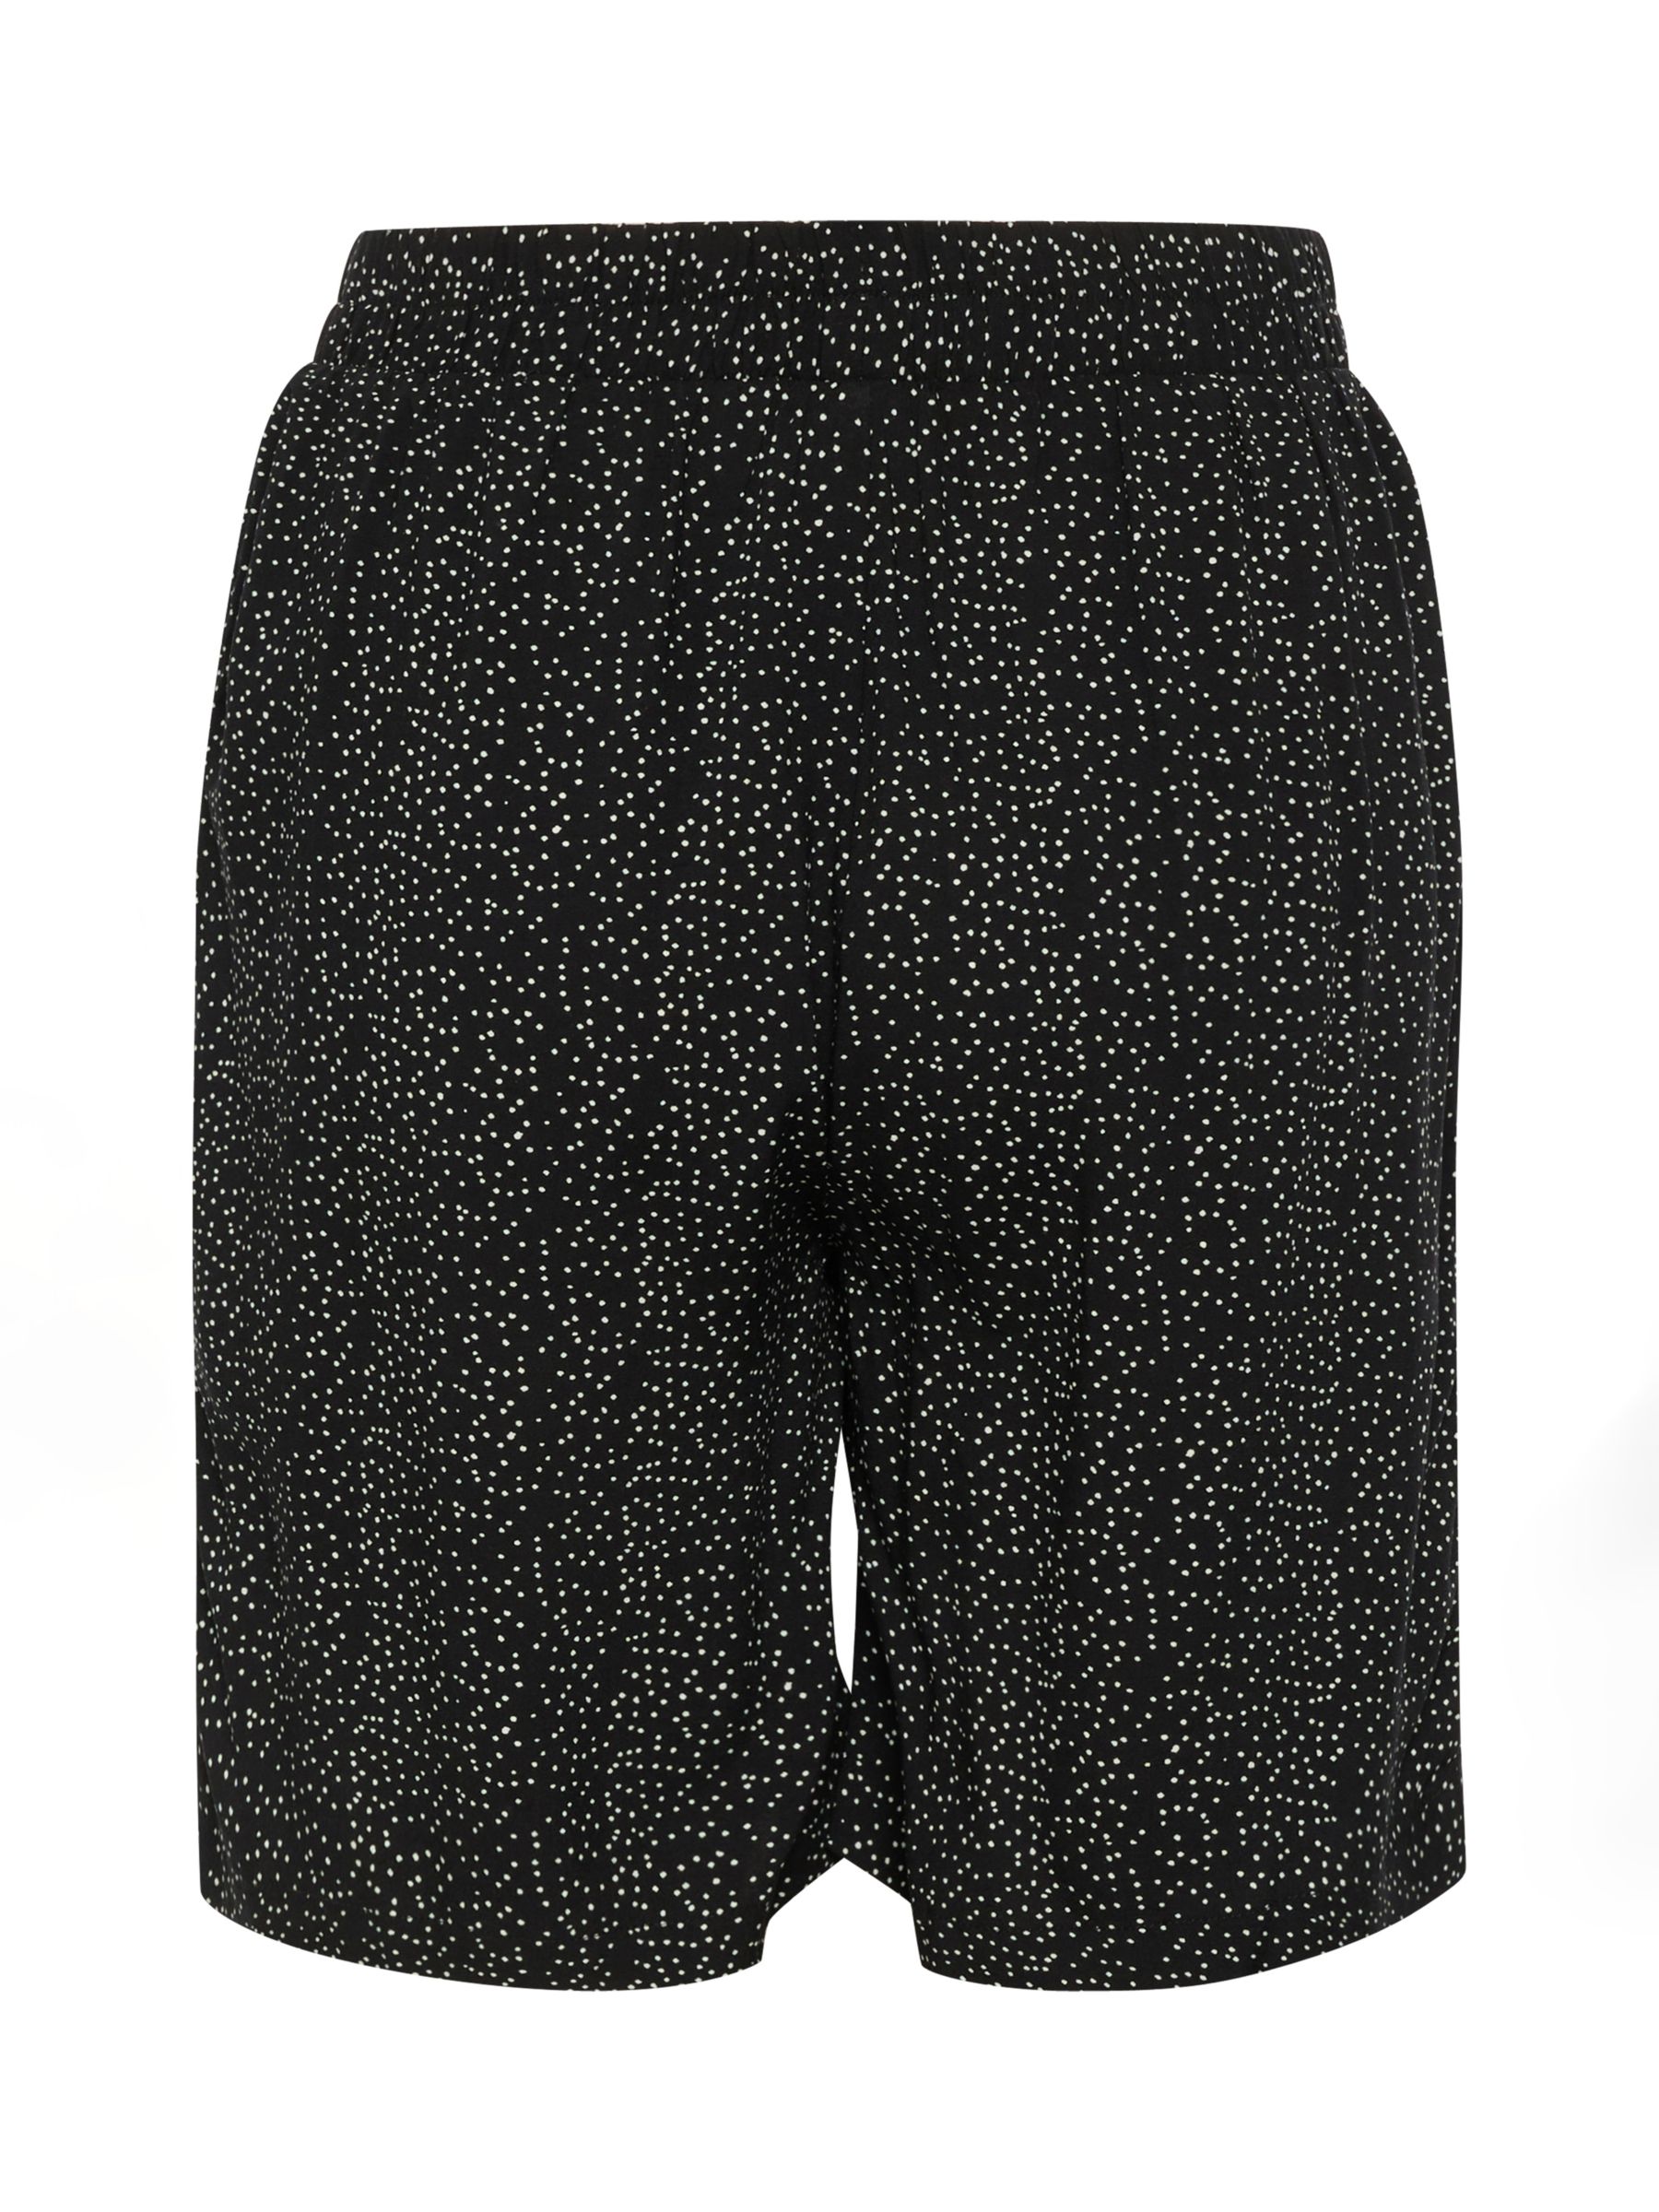 Saint Tropez Edua Wide Leg High Waist Shorts, Black Mini Dot, XXL